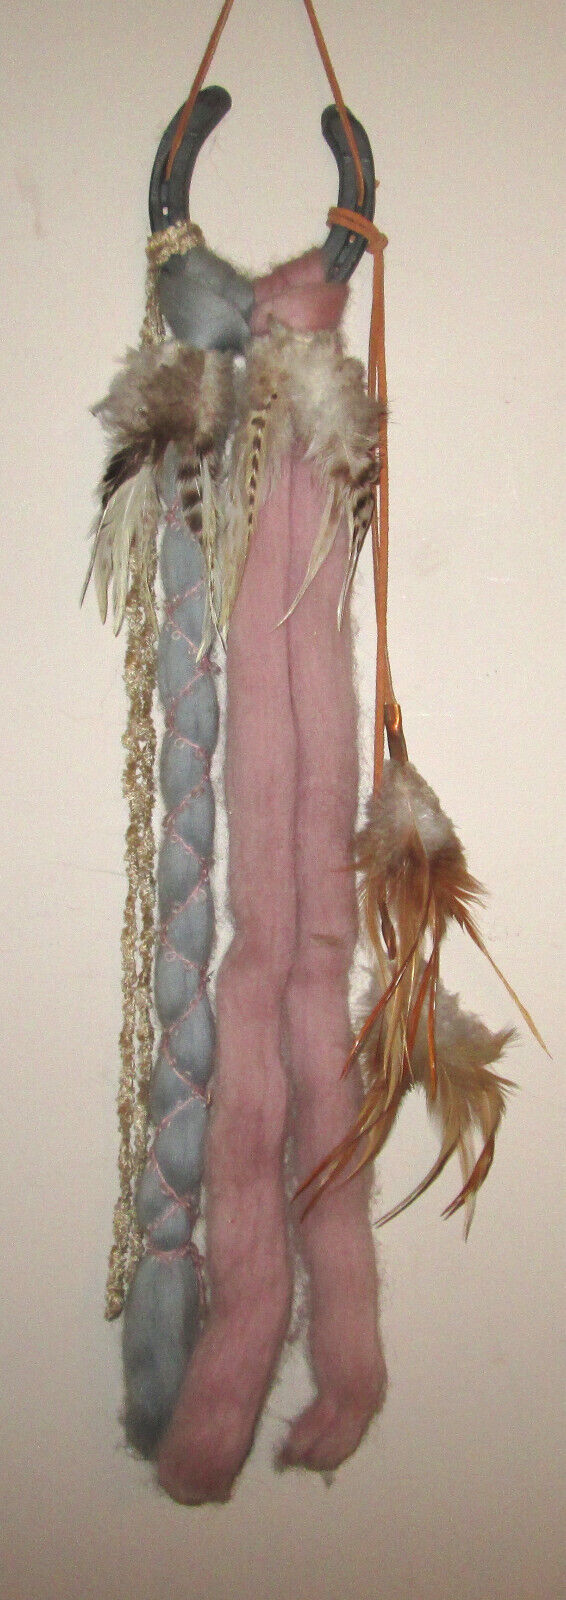 Vtg Native American Indian Dream Catcher Mandala Wool Fur Leather Beads H SHOE